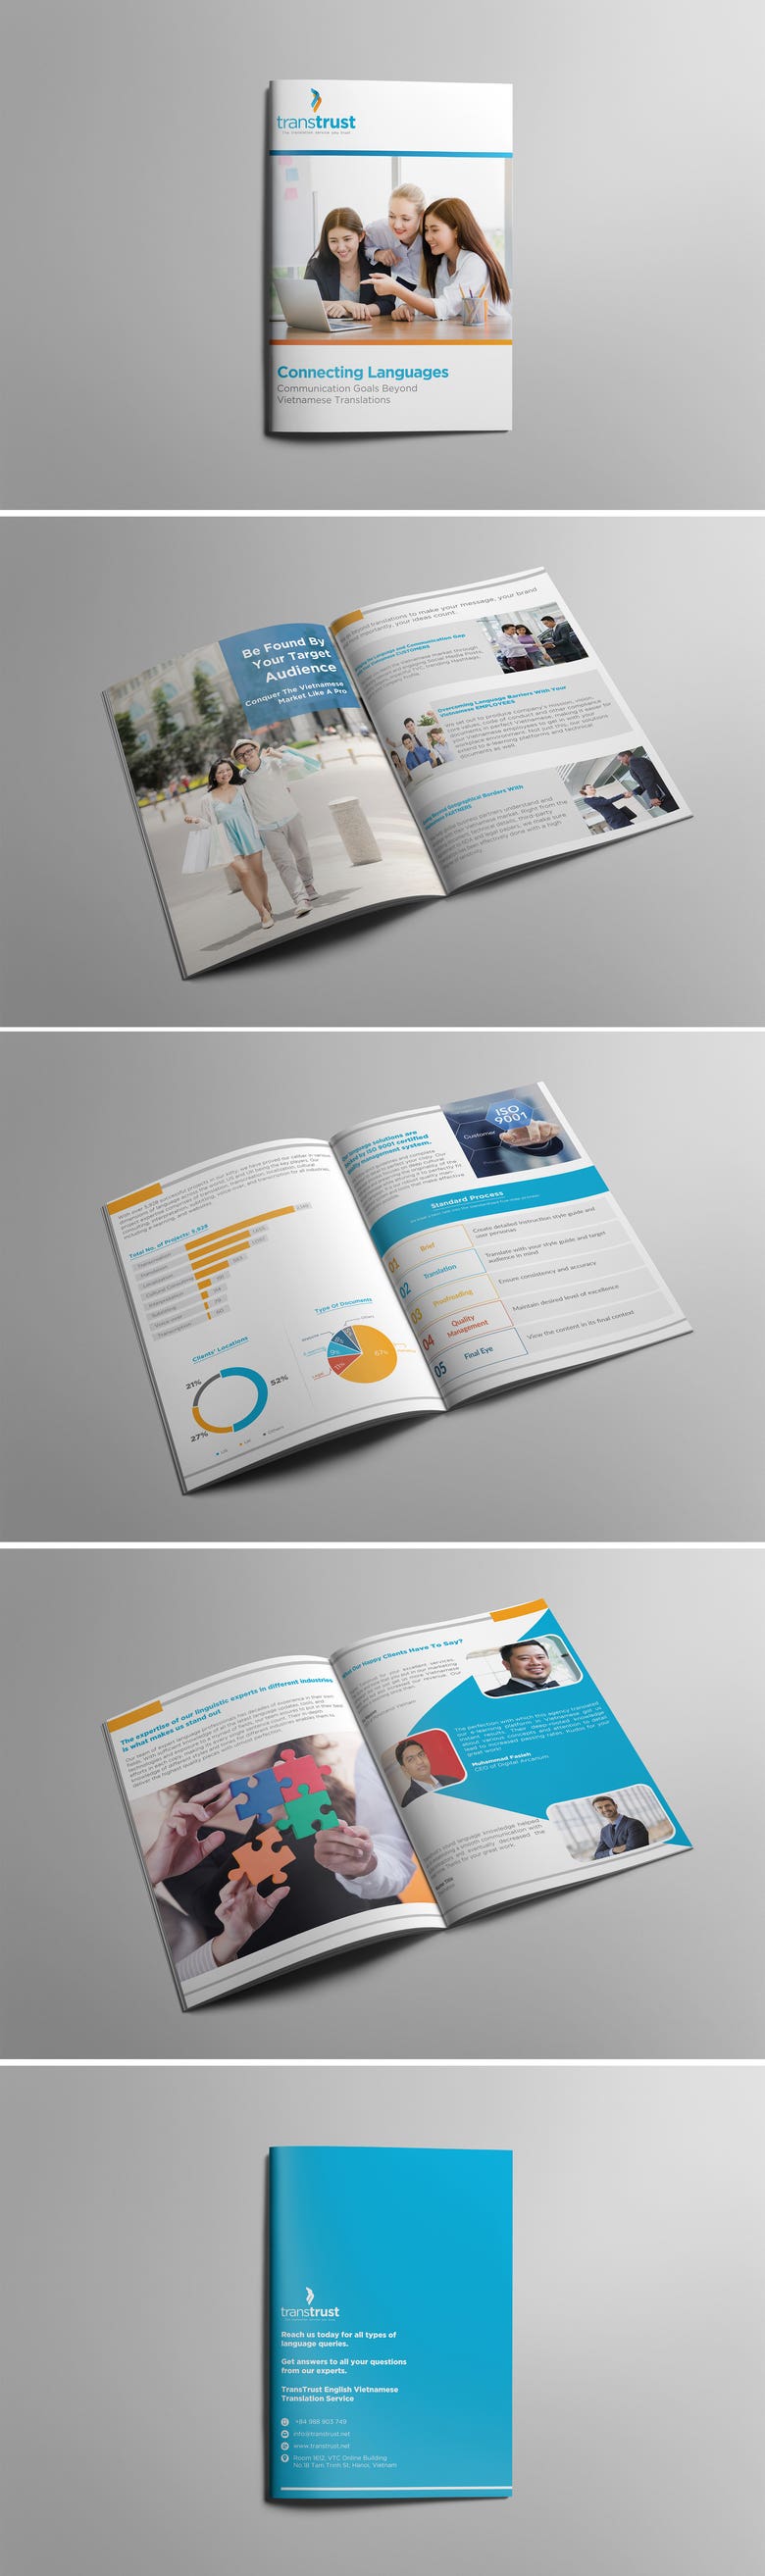 Brochure Design for Transtrust